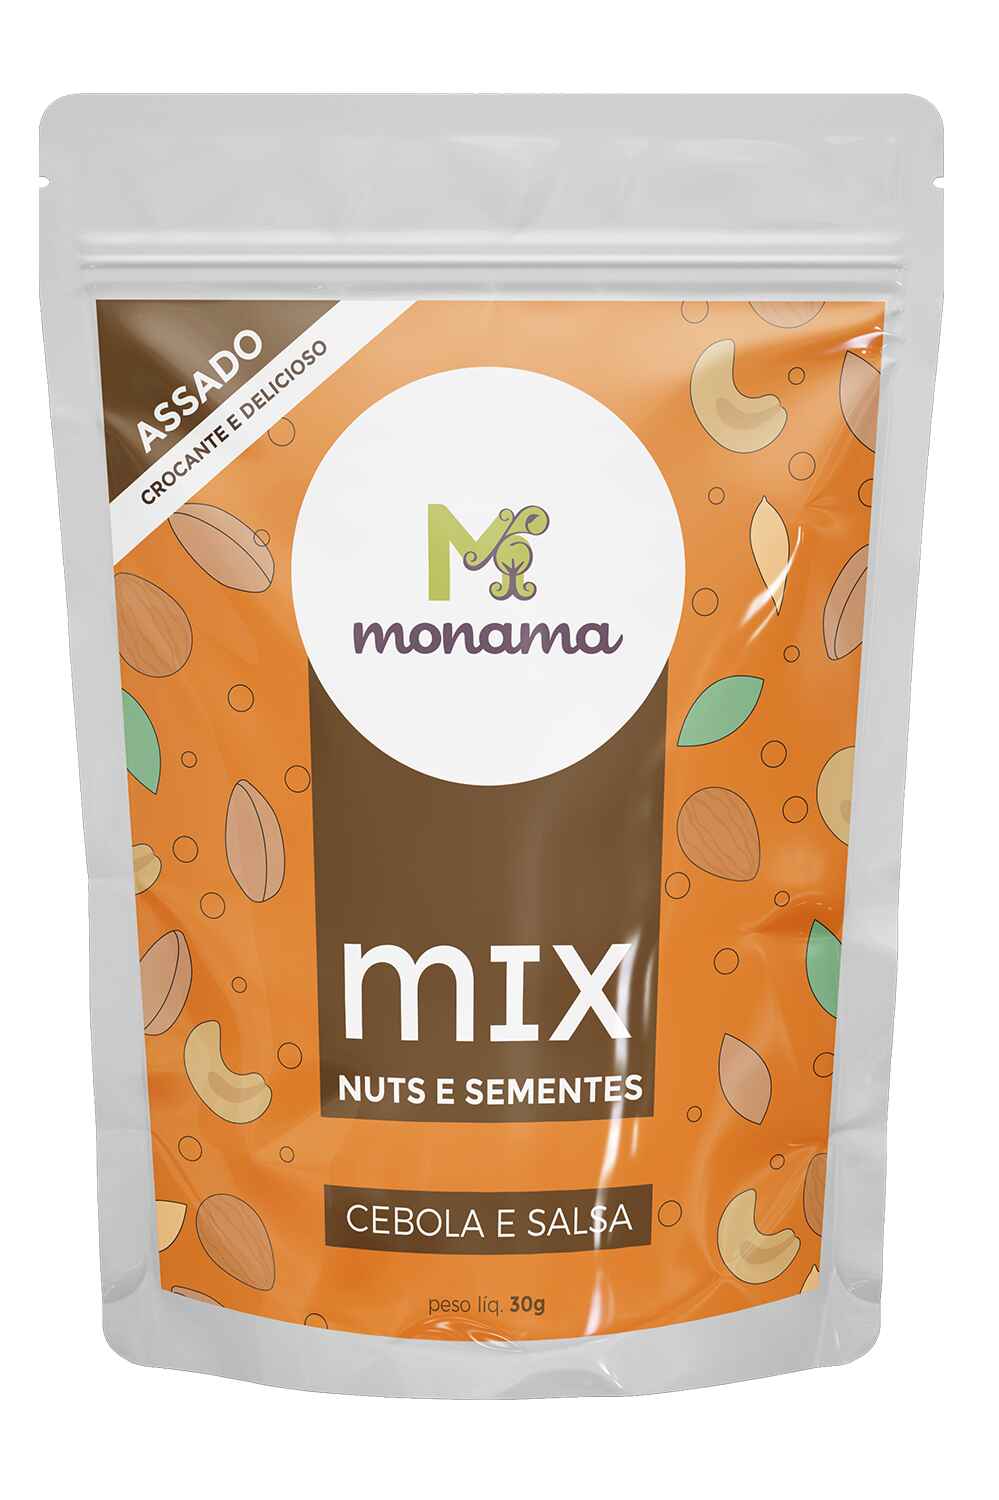 Mix Nuts Sementes Cebola Salsa 30g Monama